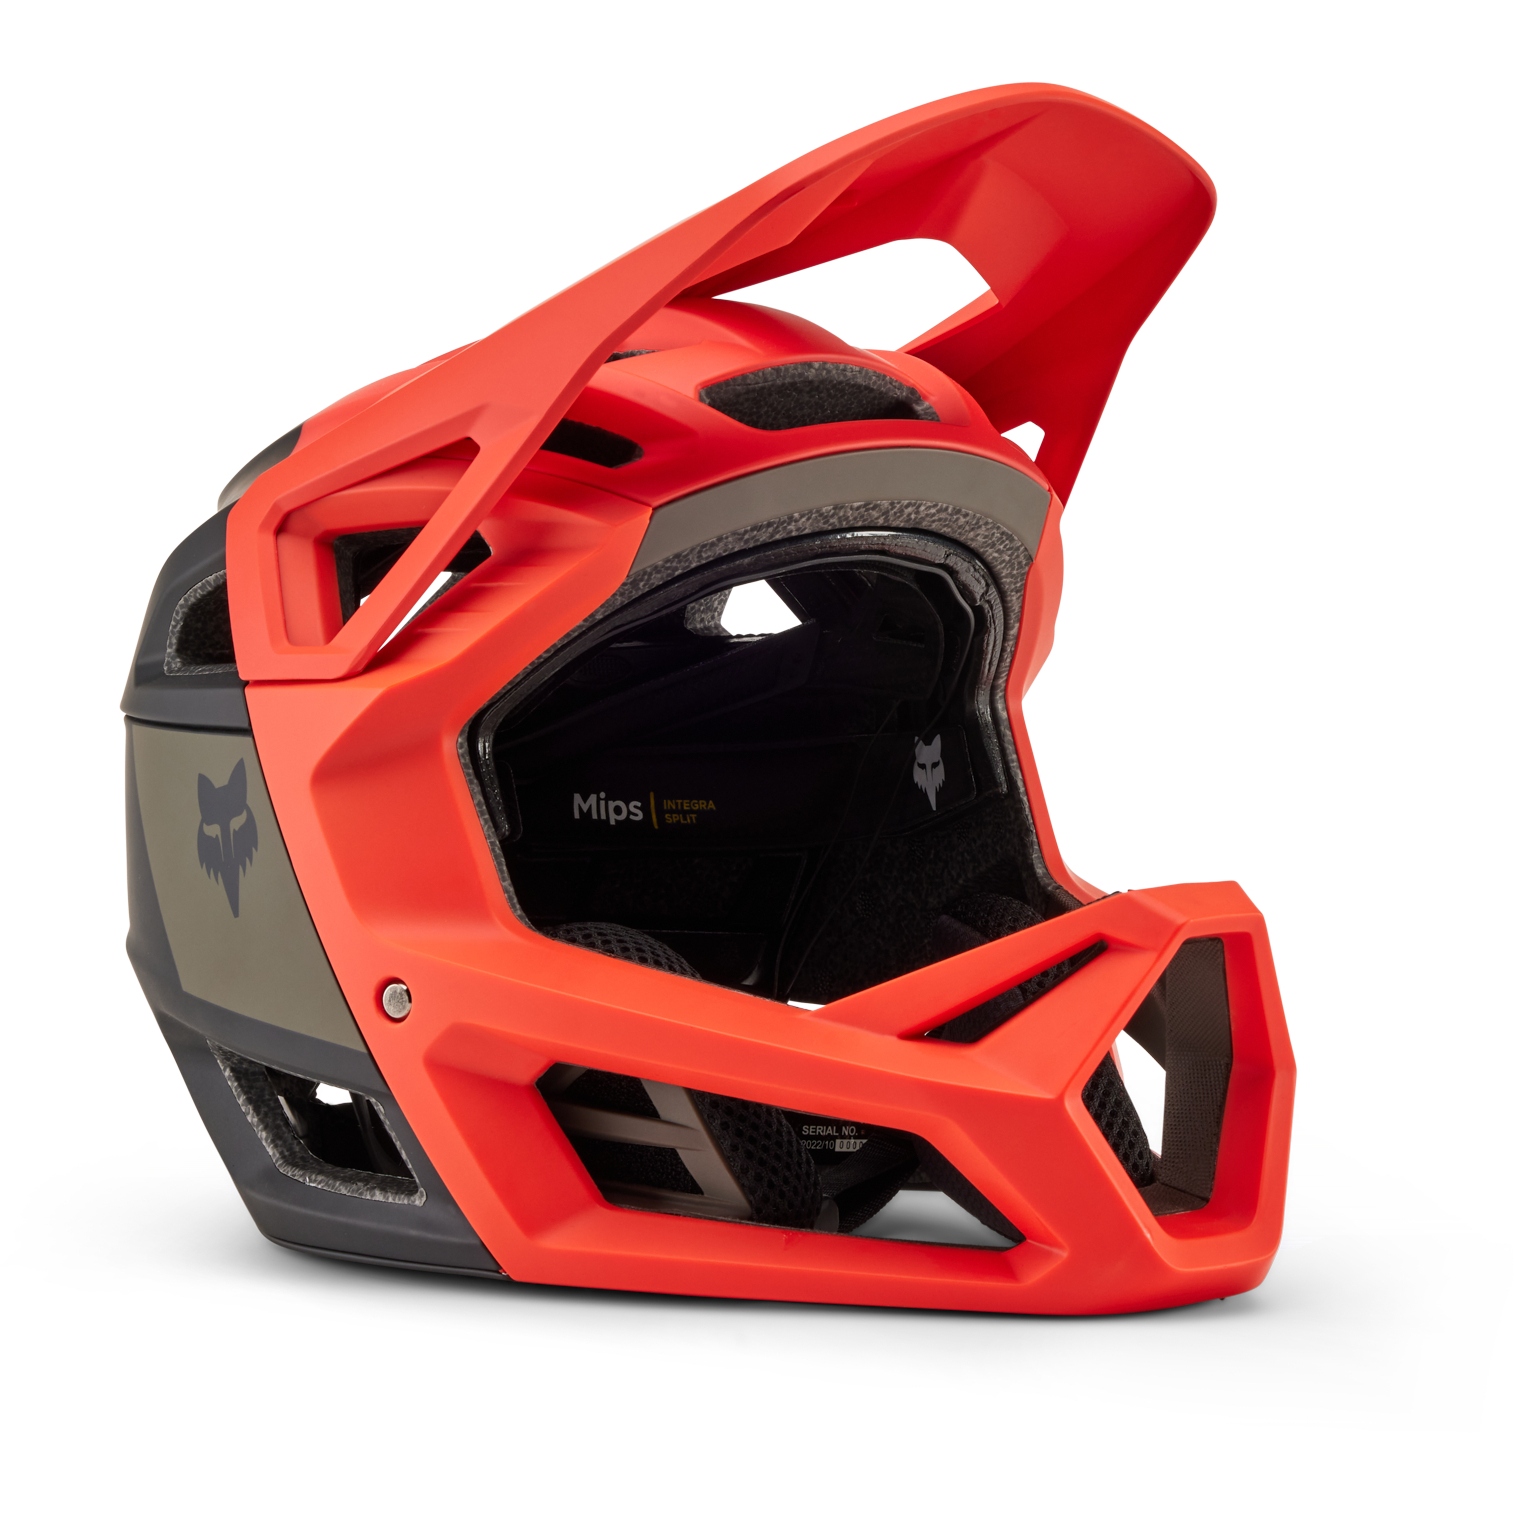 Produktbild von FOX Proframe RS Full Face Helm - orange flame